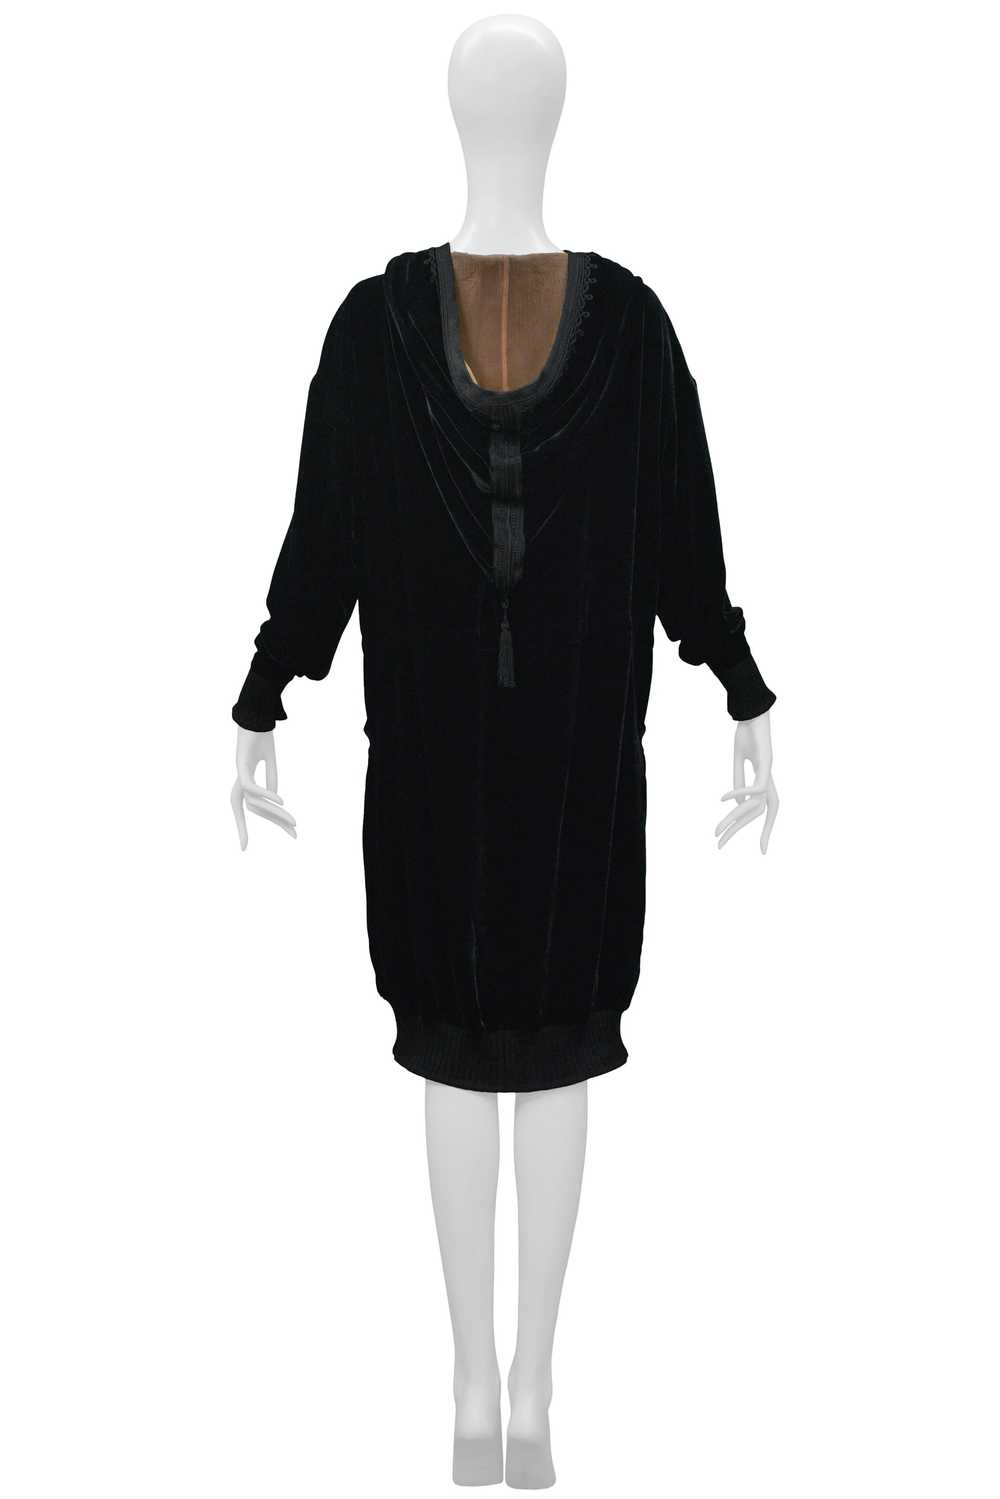 GAULTIER BLACK VELVET HOODIE TUNIC DRESS 2010 - image 2